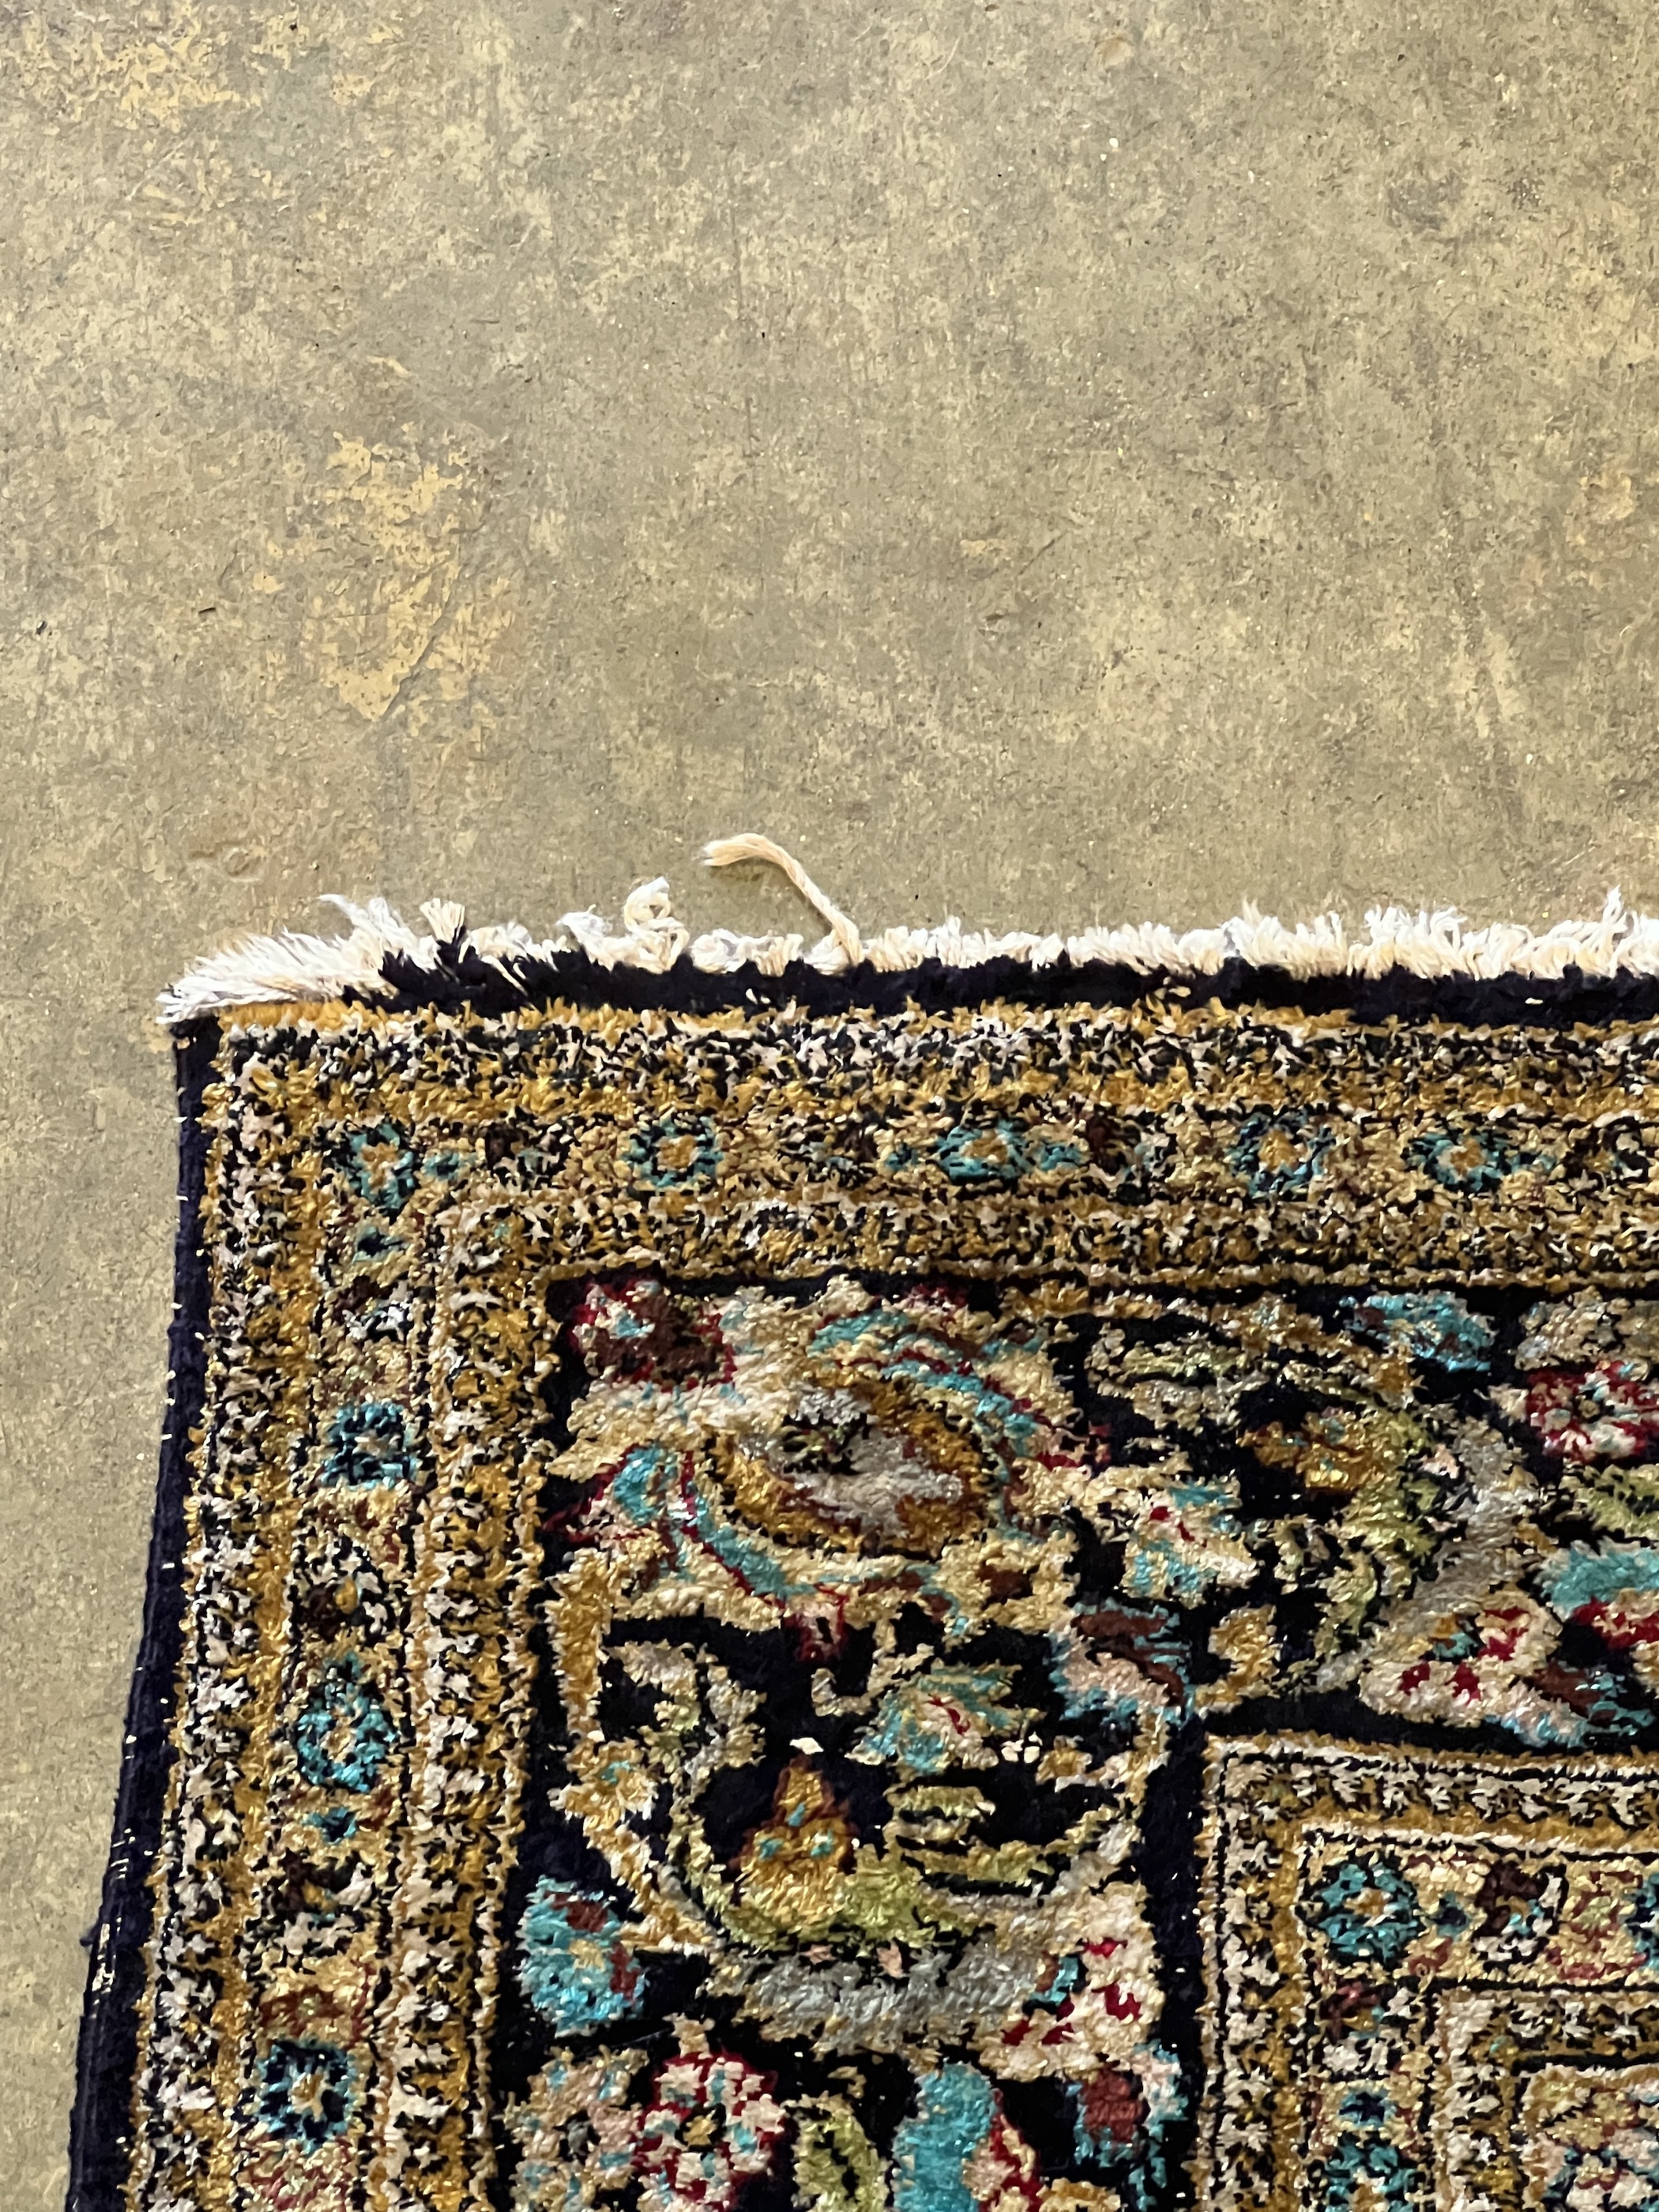 A Tabriz part silk burgundy ground rug, 218 x 150cm